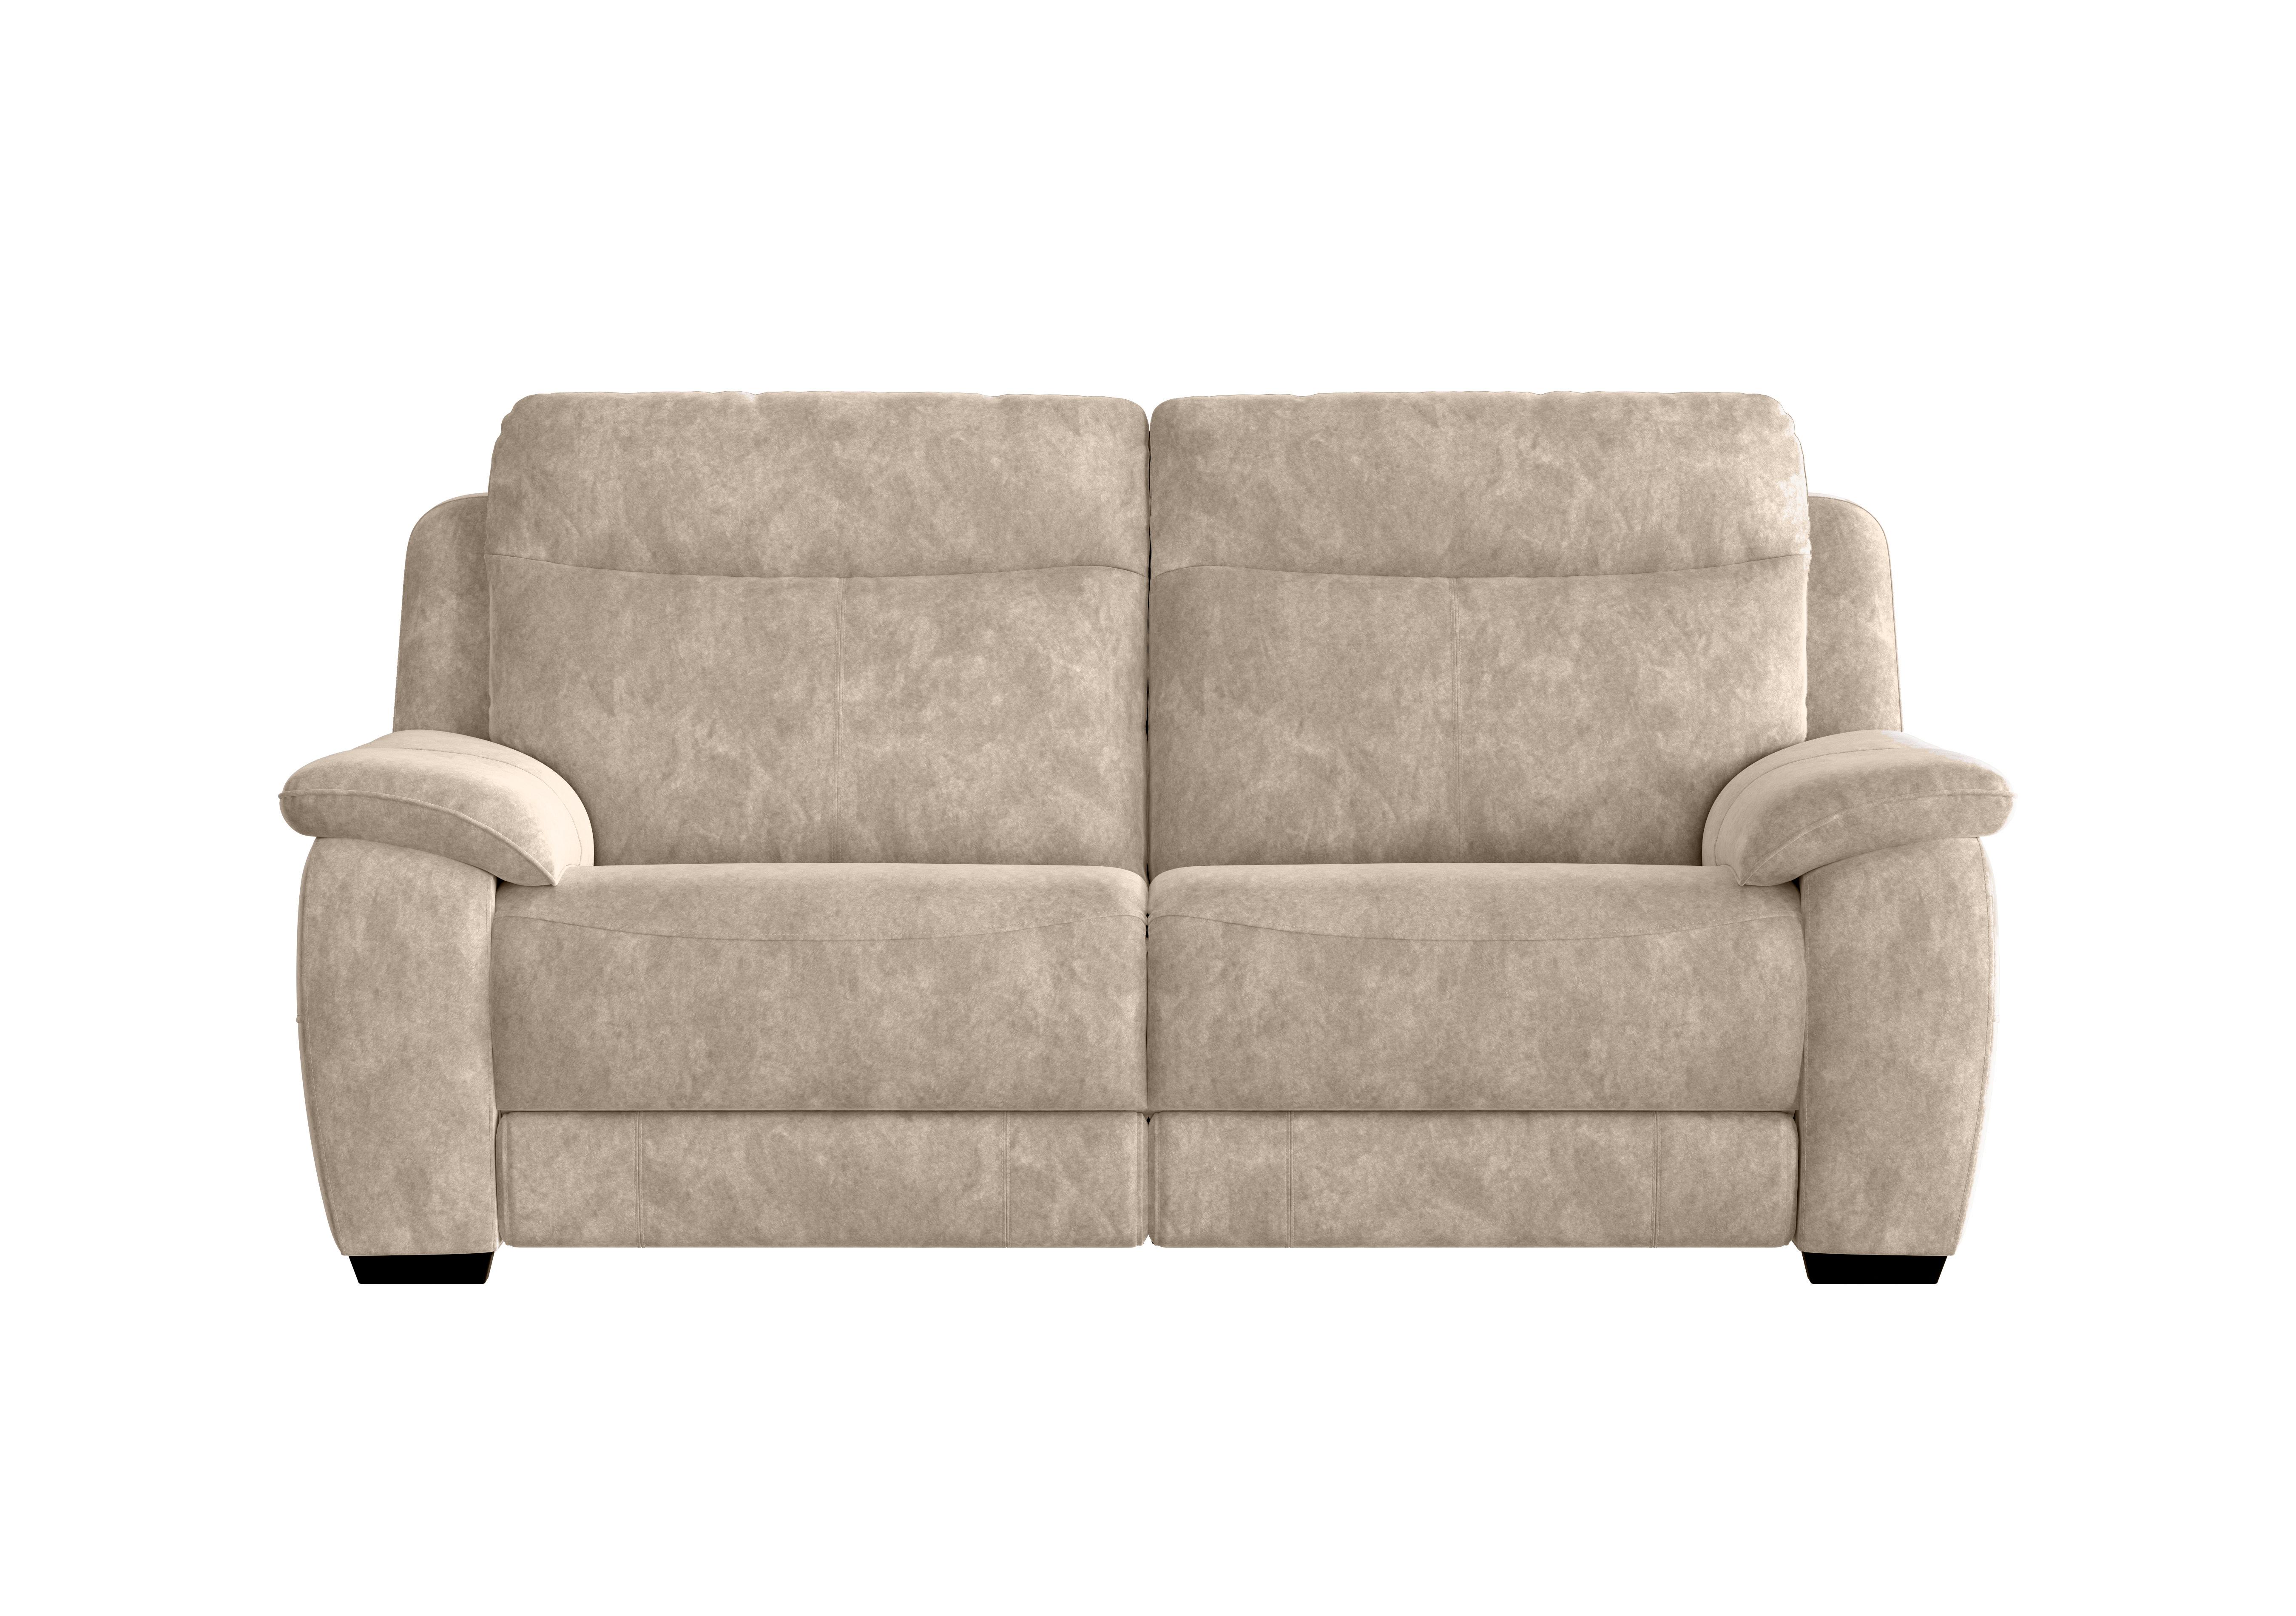 Starlight Express 3 Seater Fabric Sofa in Bfa-Bnn-R26 Fv2 Cream on Furniture Village